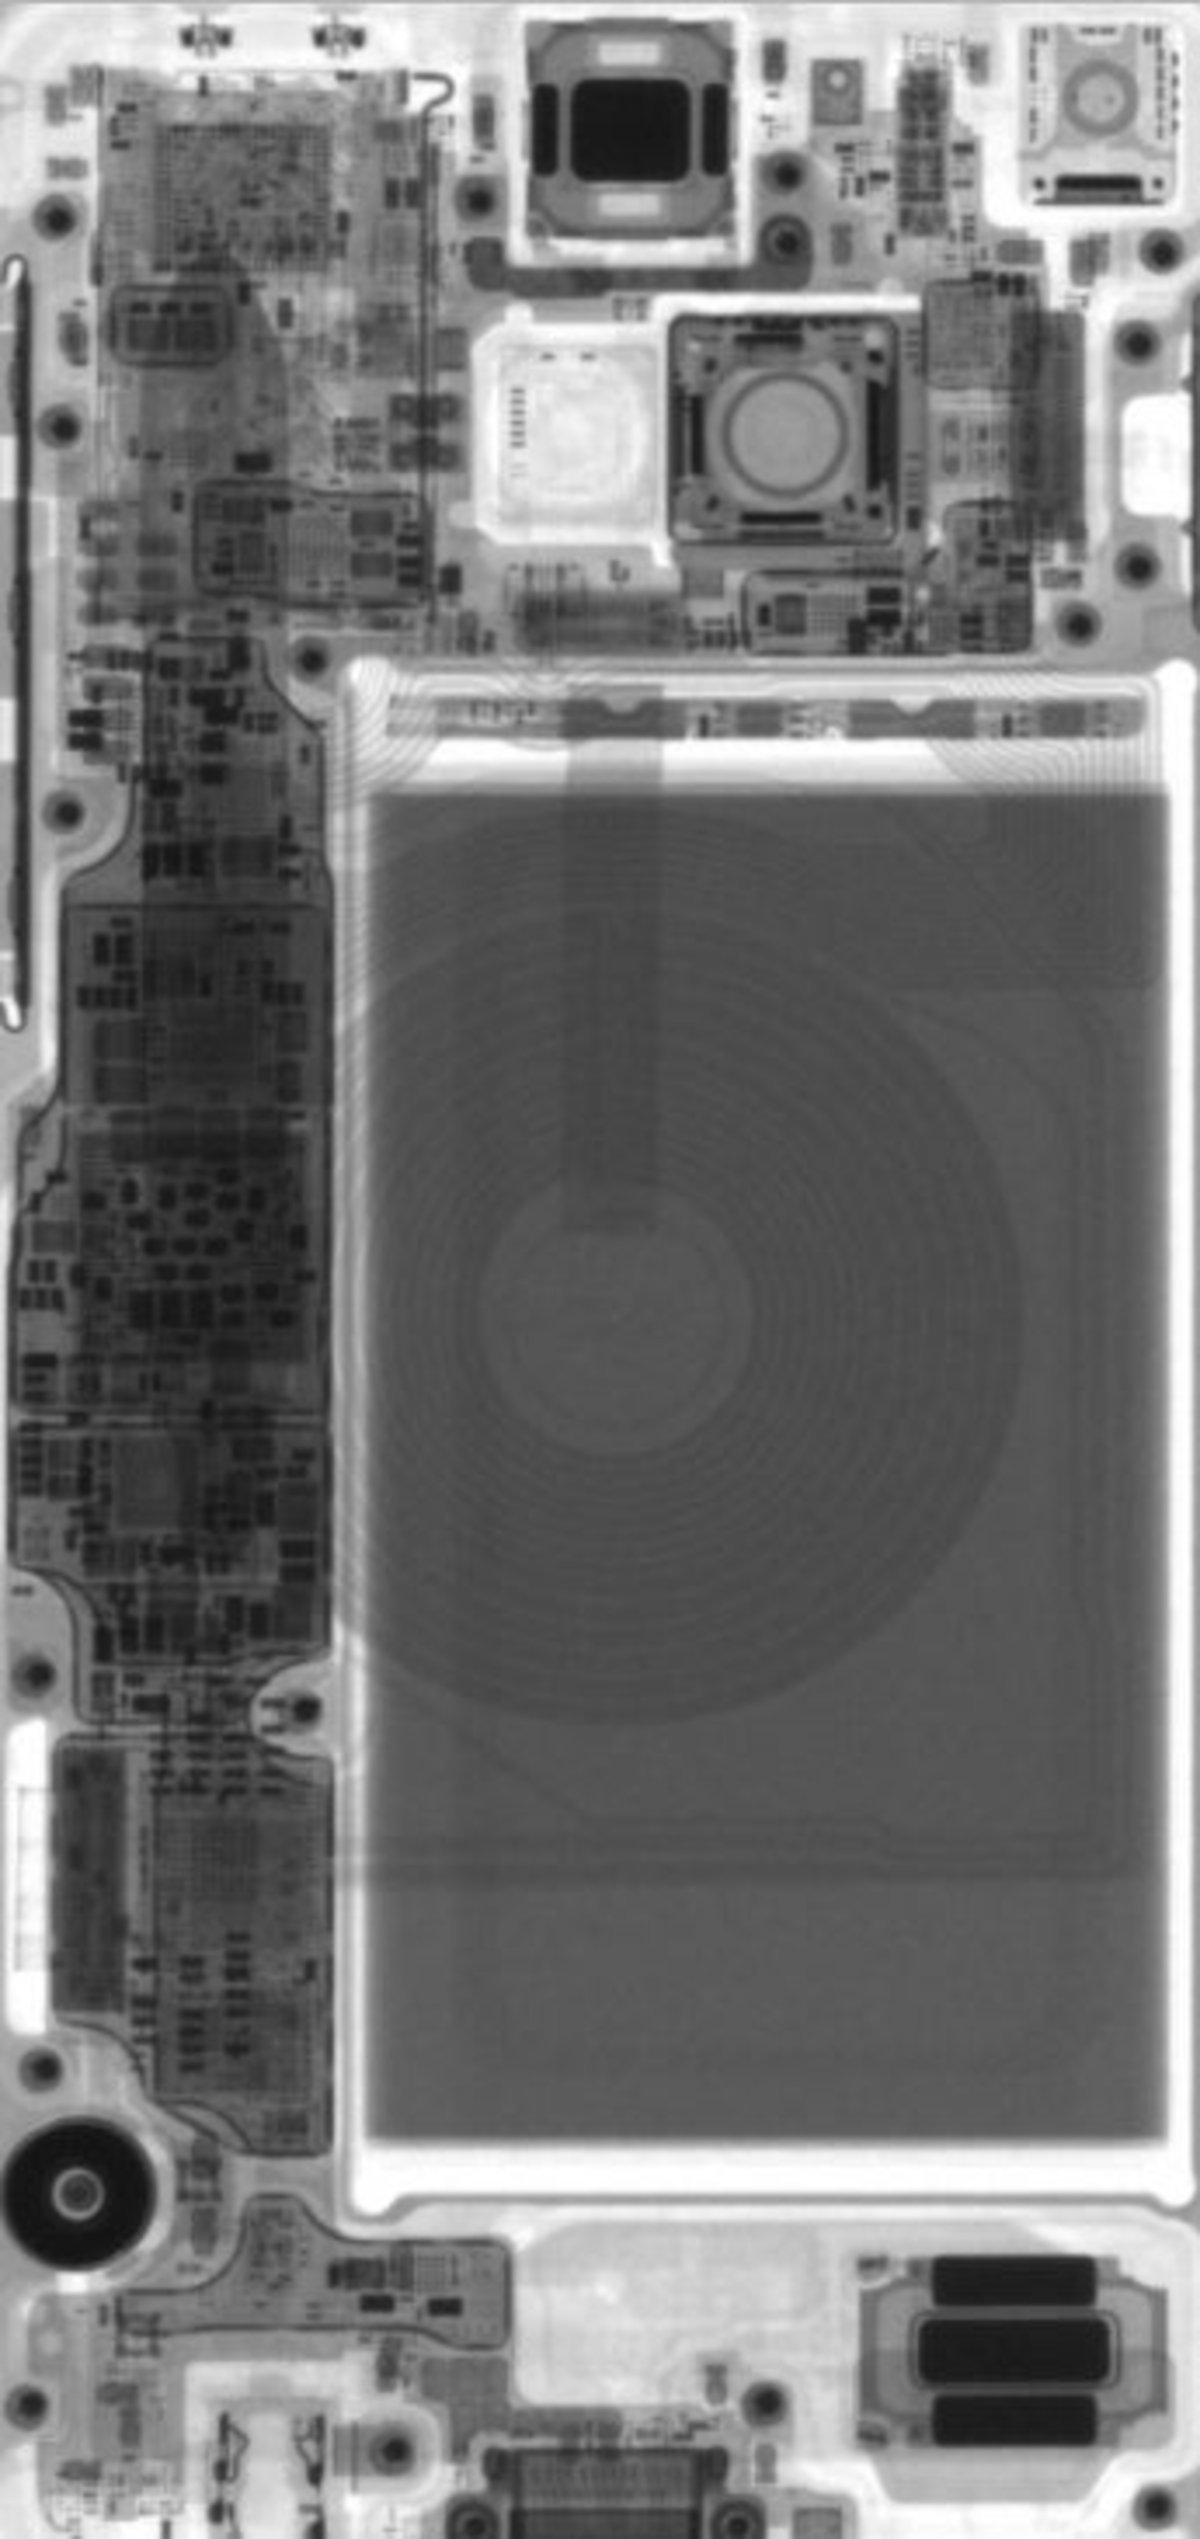 Samsung Galaxy fondos pantalla transparentes